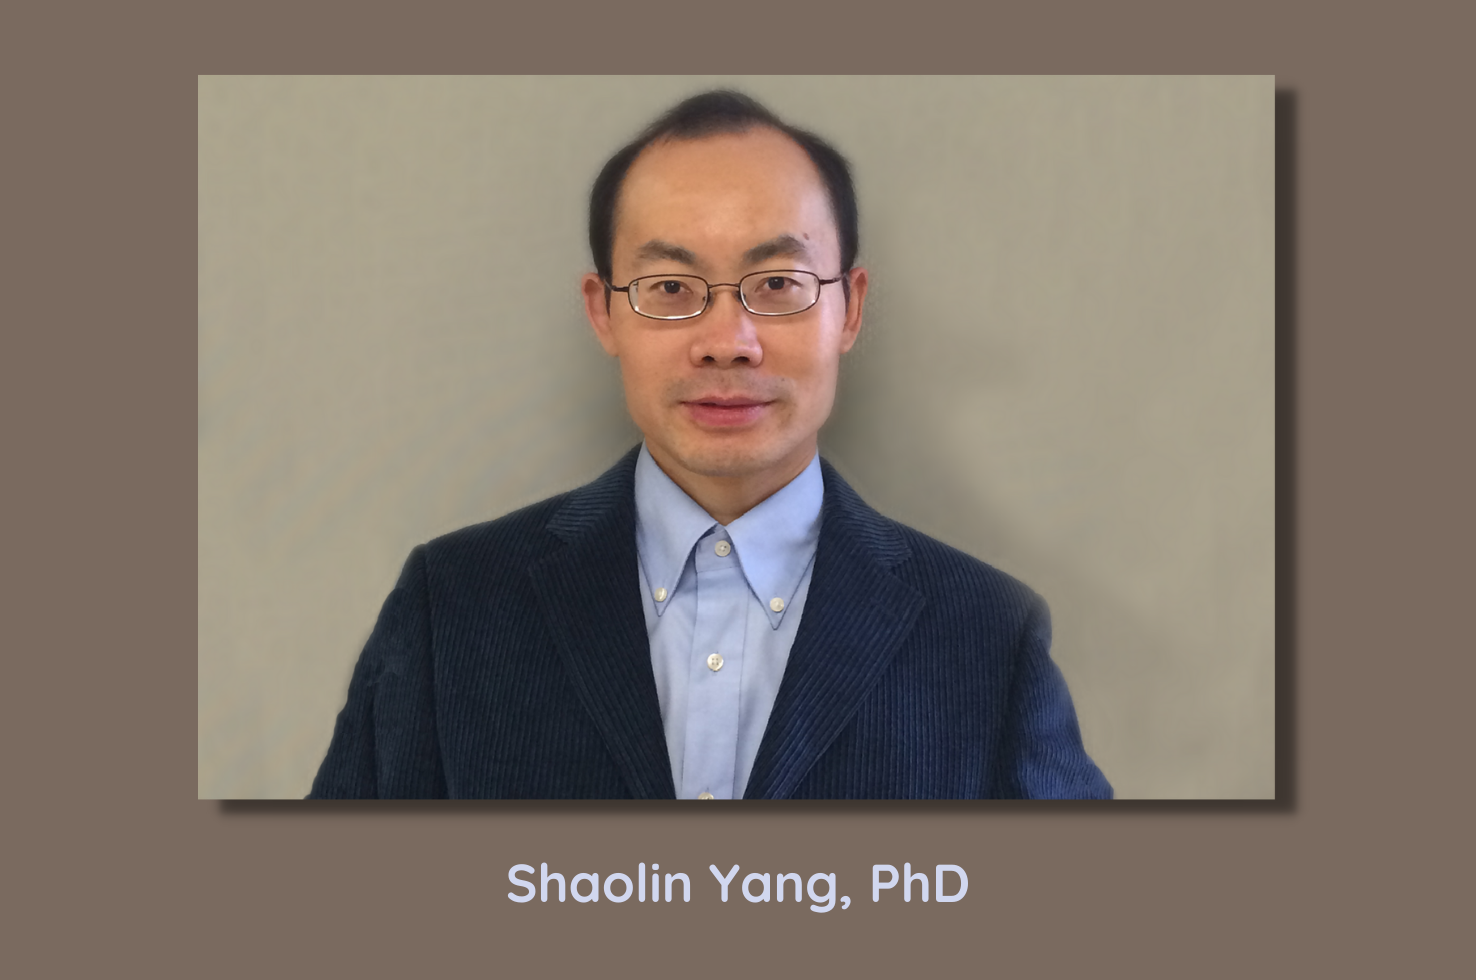 Dr. Shaolin Yang